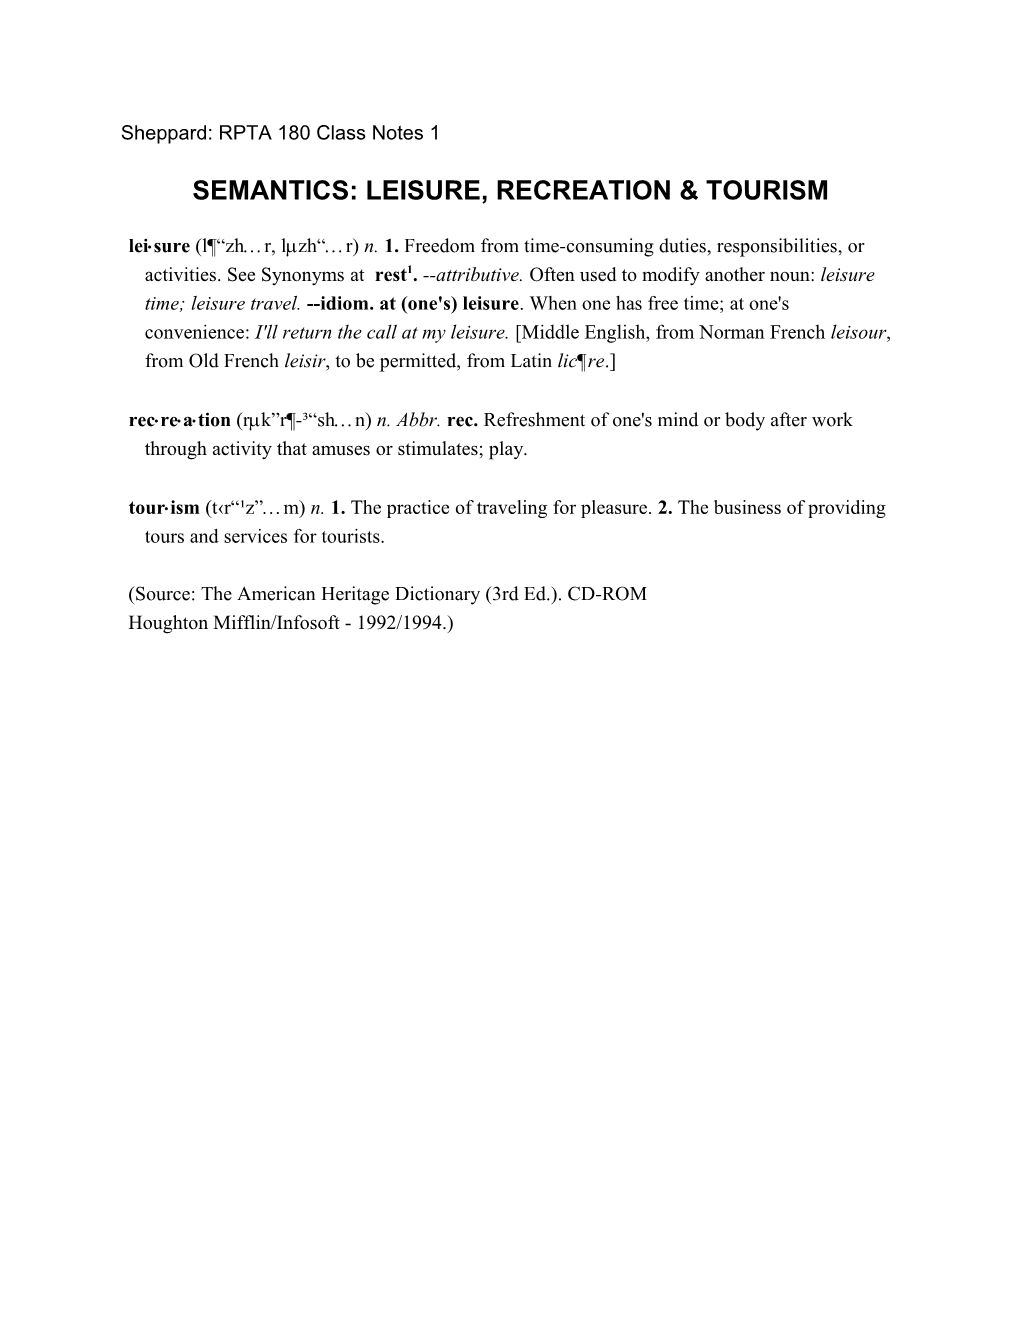 Semantics: Leisure, Recreation & Tourism